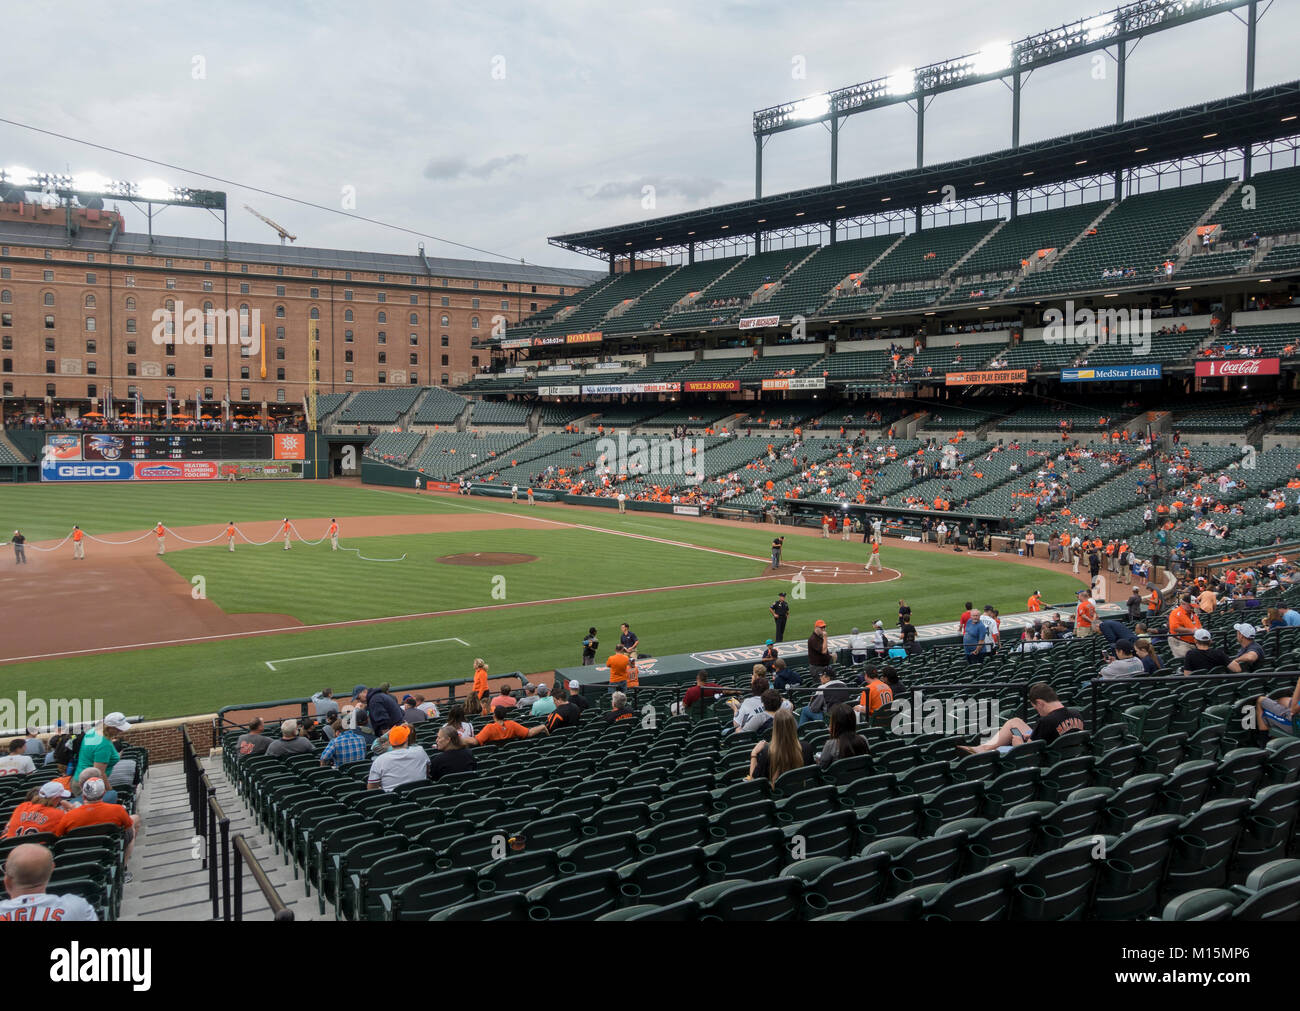 An Oriole Park at Camden Yards, die Heimat der Baltimore Orioles Major League Baseball Team in Baltimore, Maryland, USA. Stockfoto